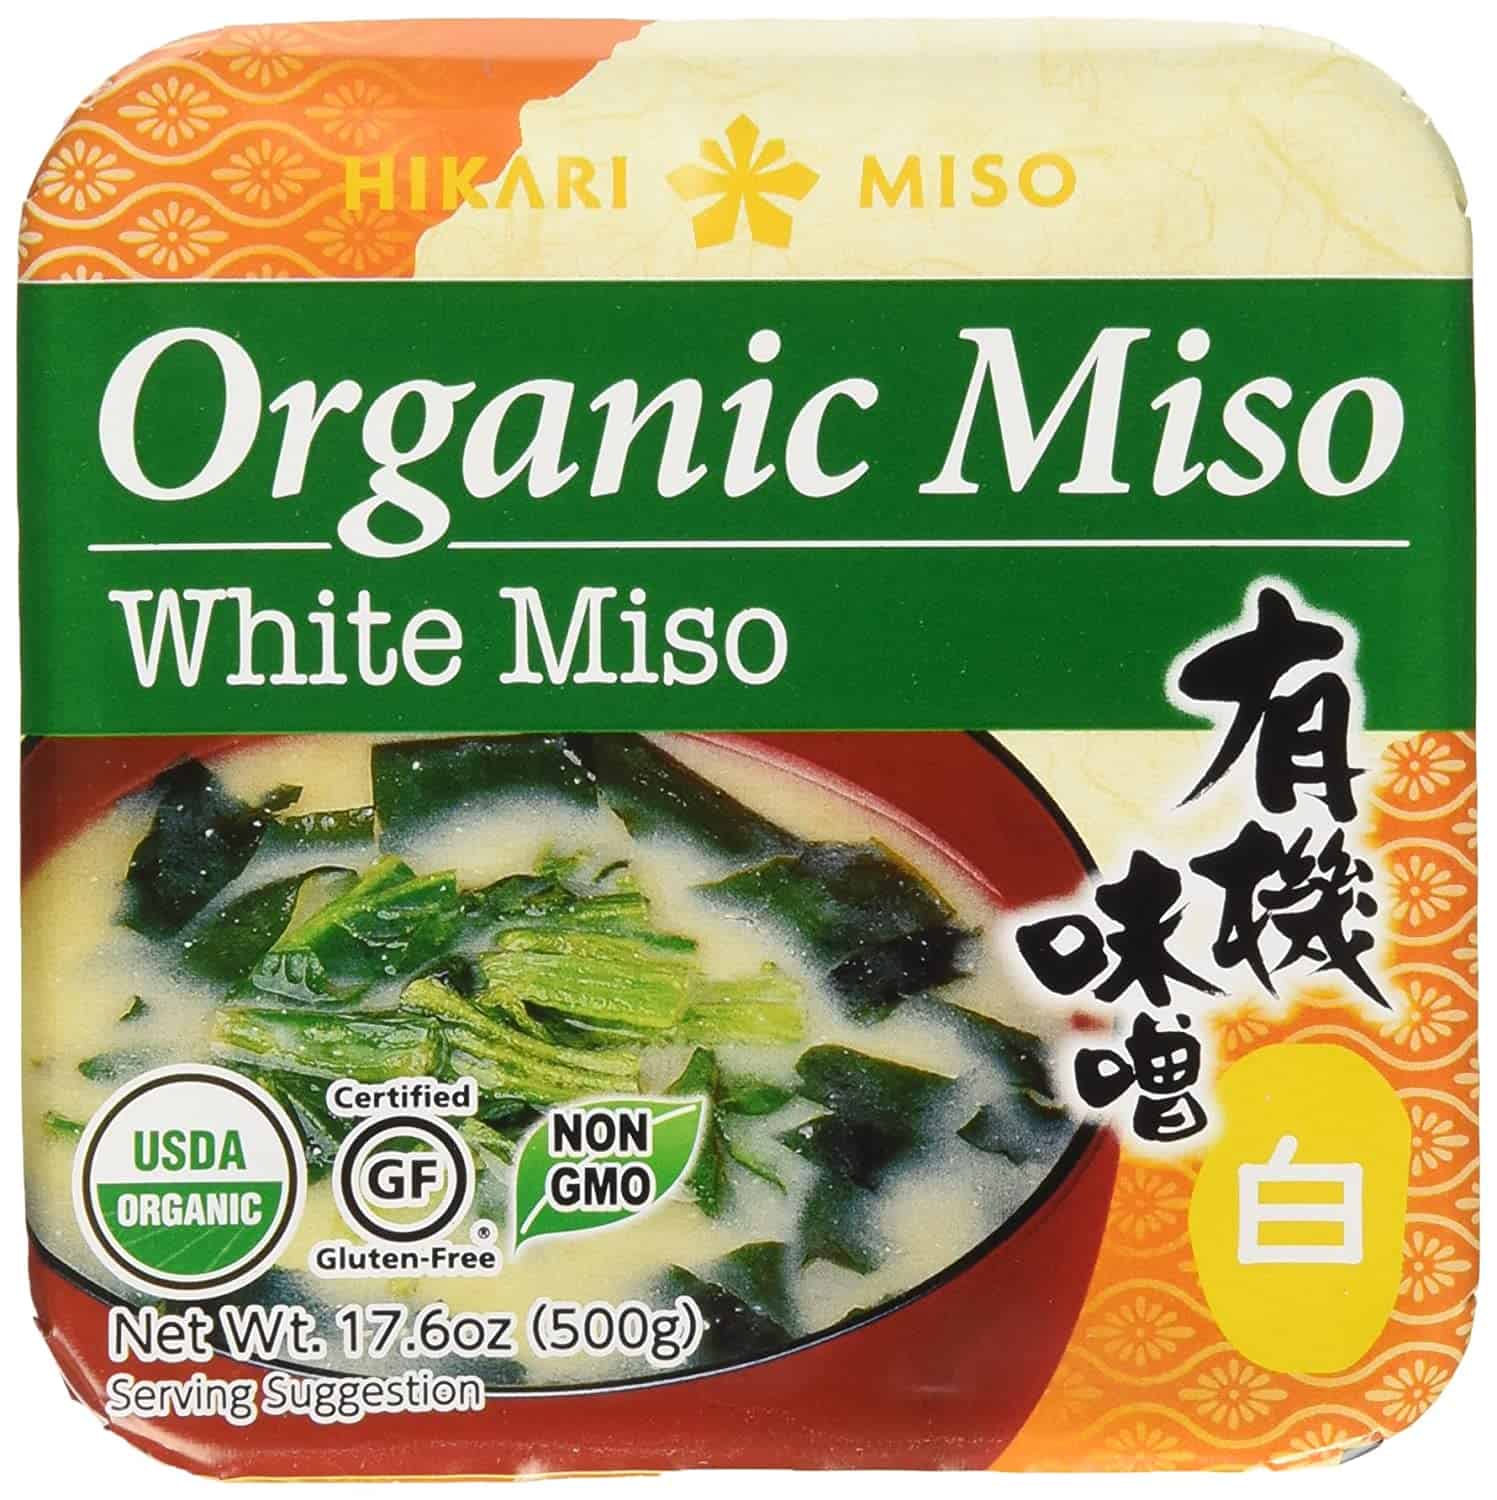 Hikari organic miso ọcha